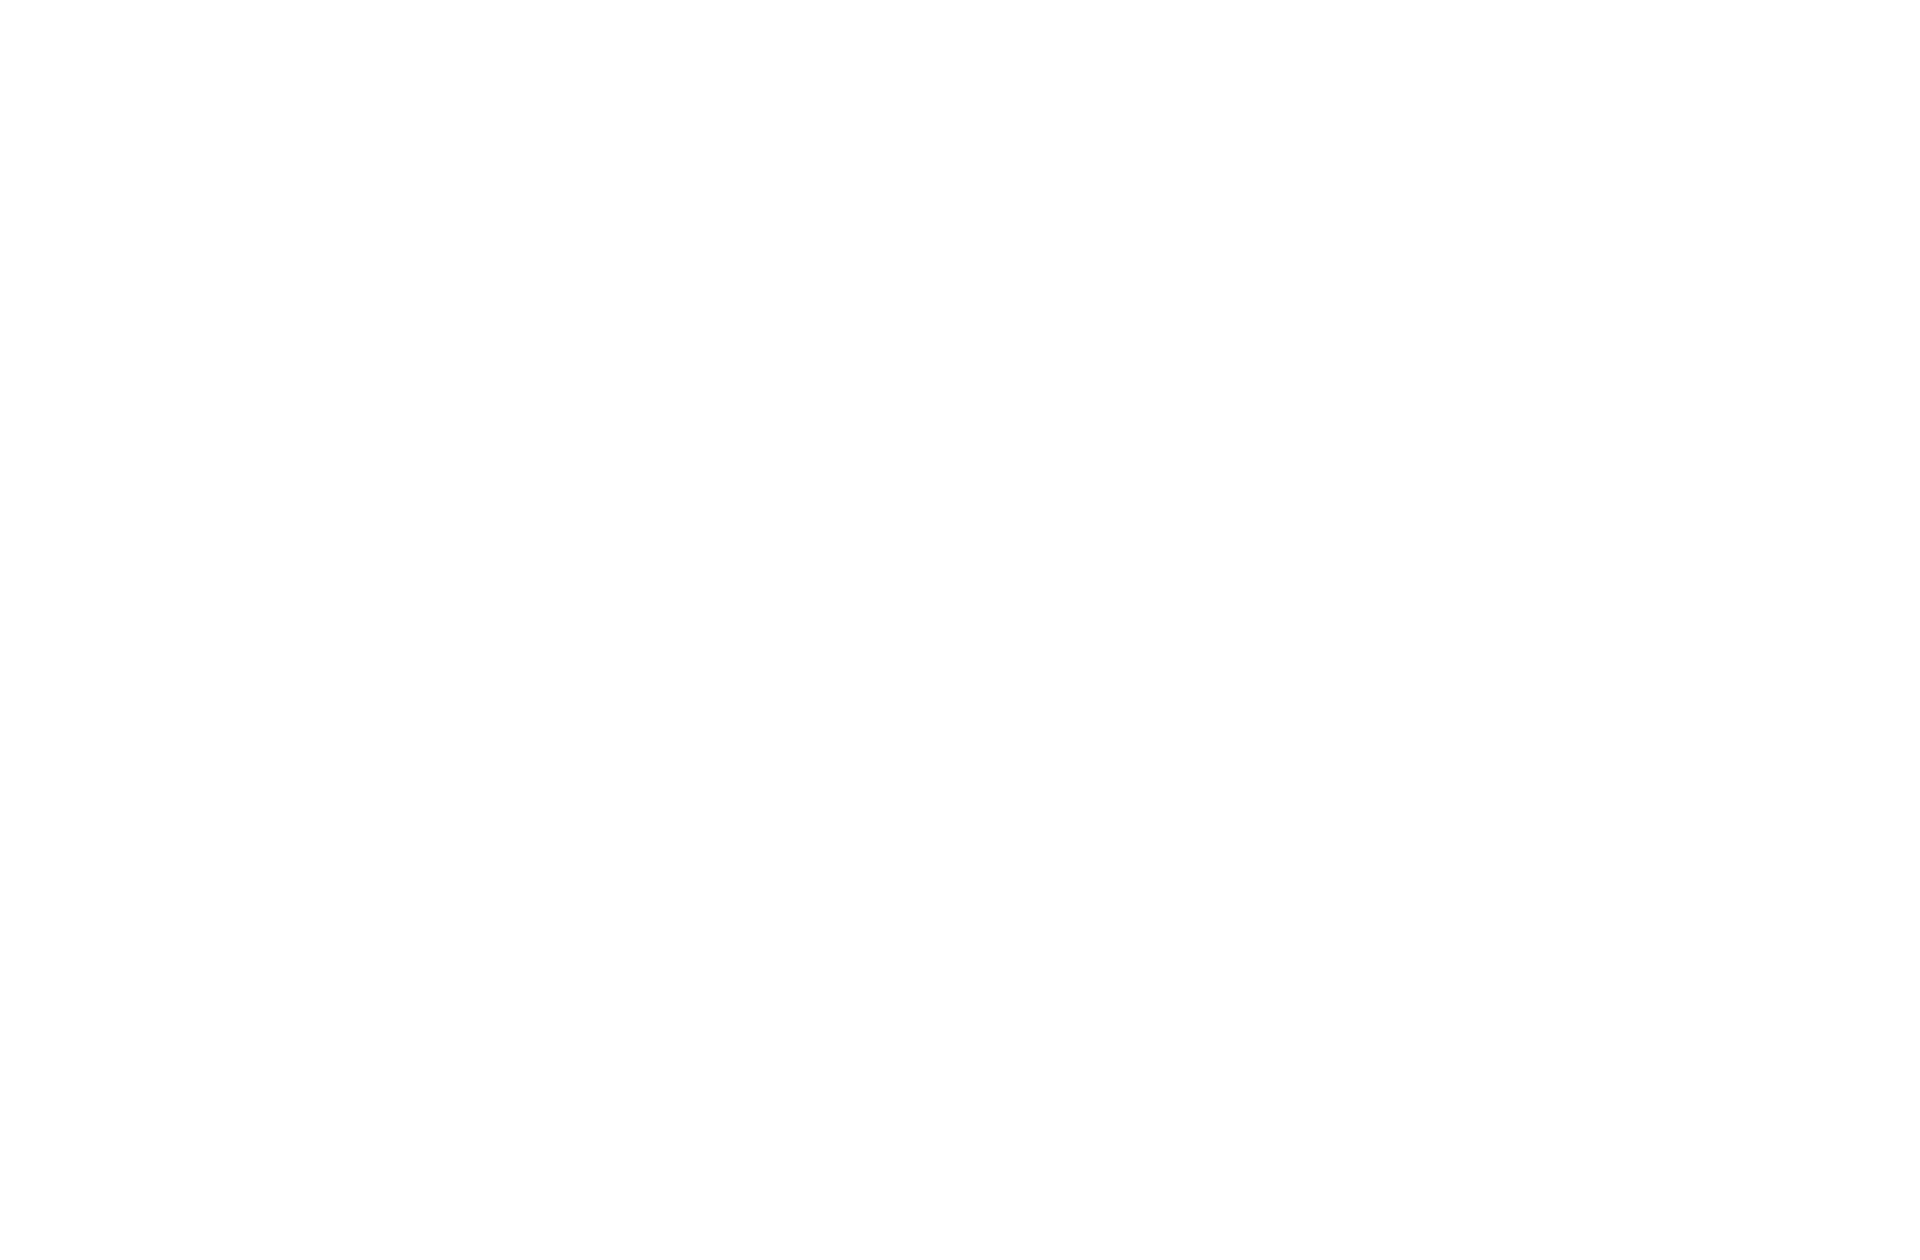 Official Selection Flicker Fest International Short Film Festival